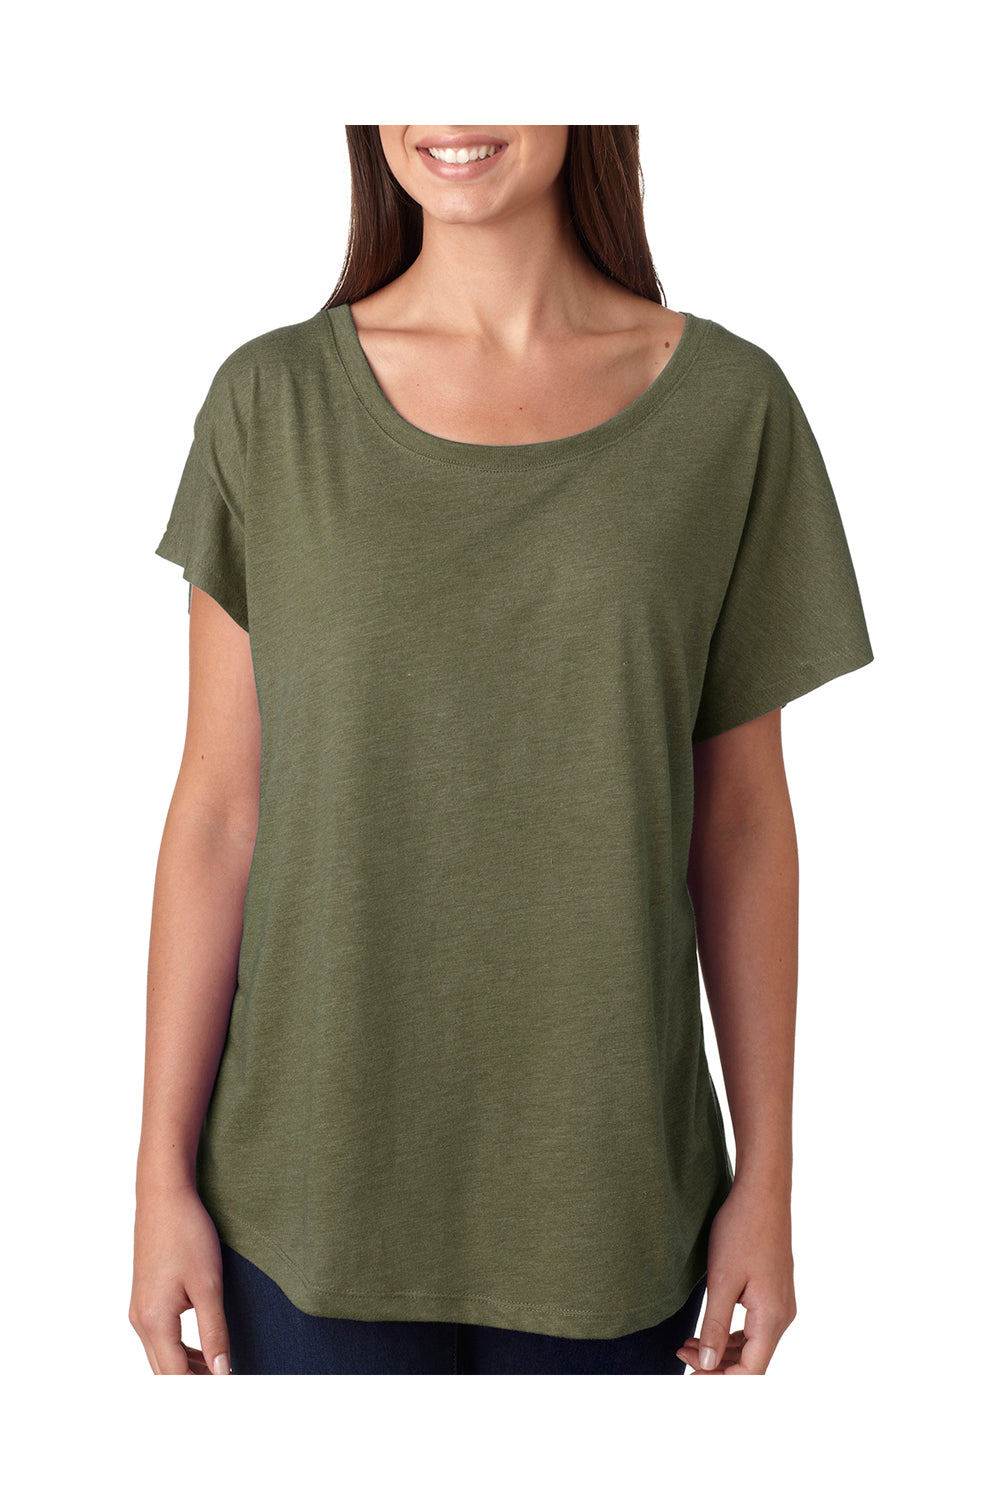 Next Level 6760 Womens Dolman Jersey Short Sleeve Scoop Neck T-Shirt Military Green Front